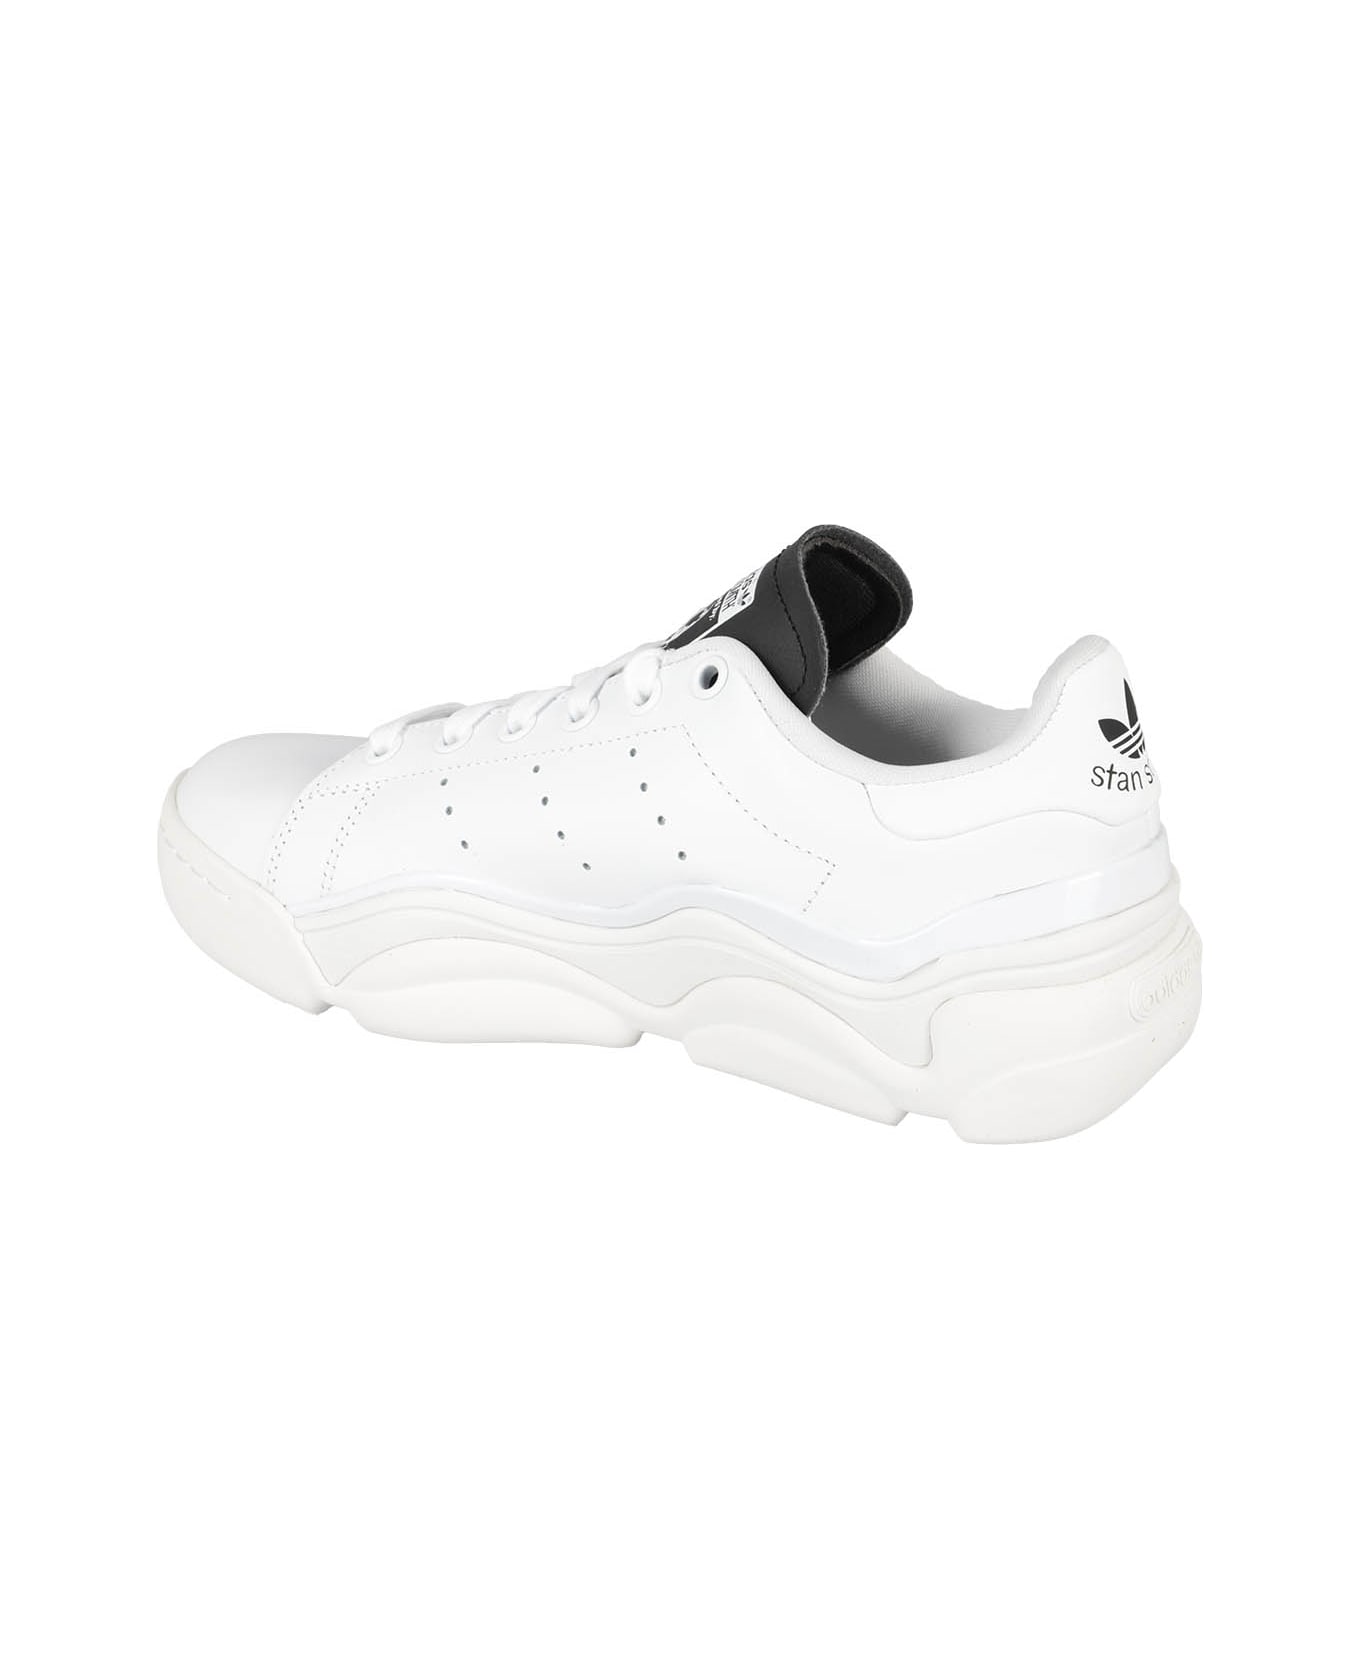 Adidas Originals Stan Smith Millenial - White Black